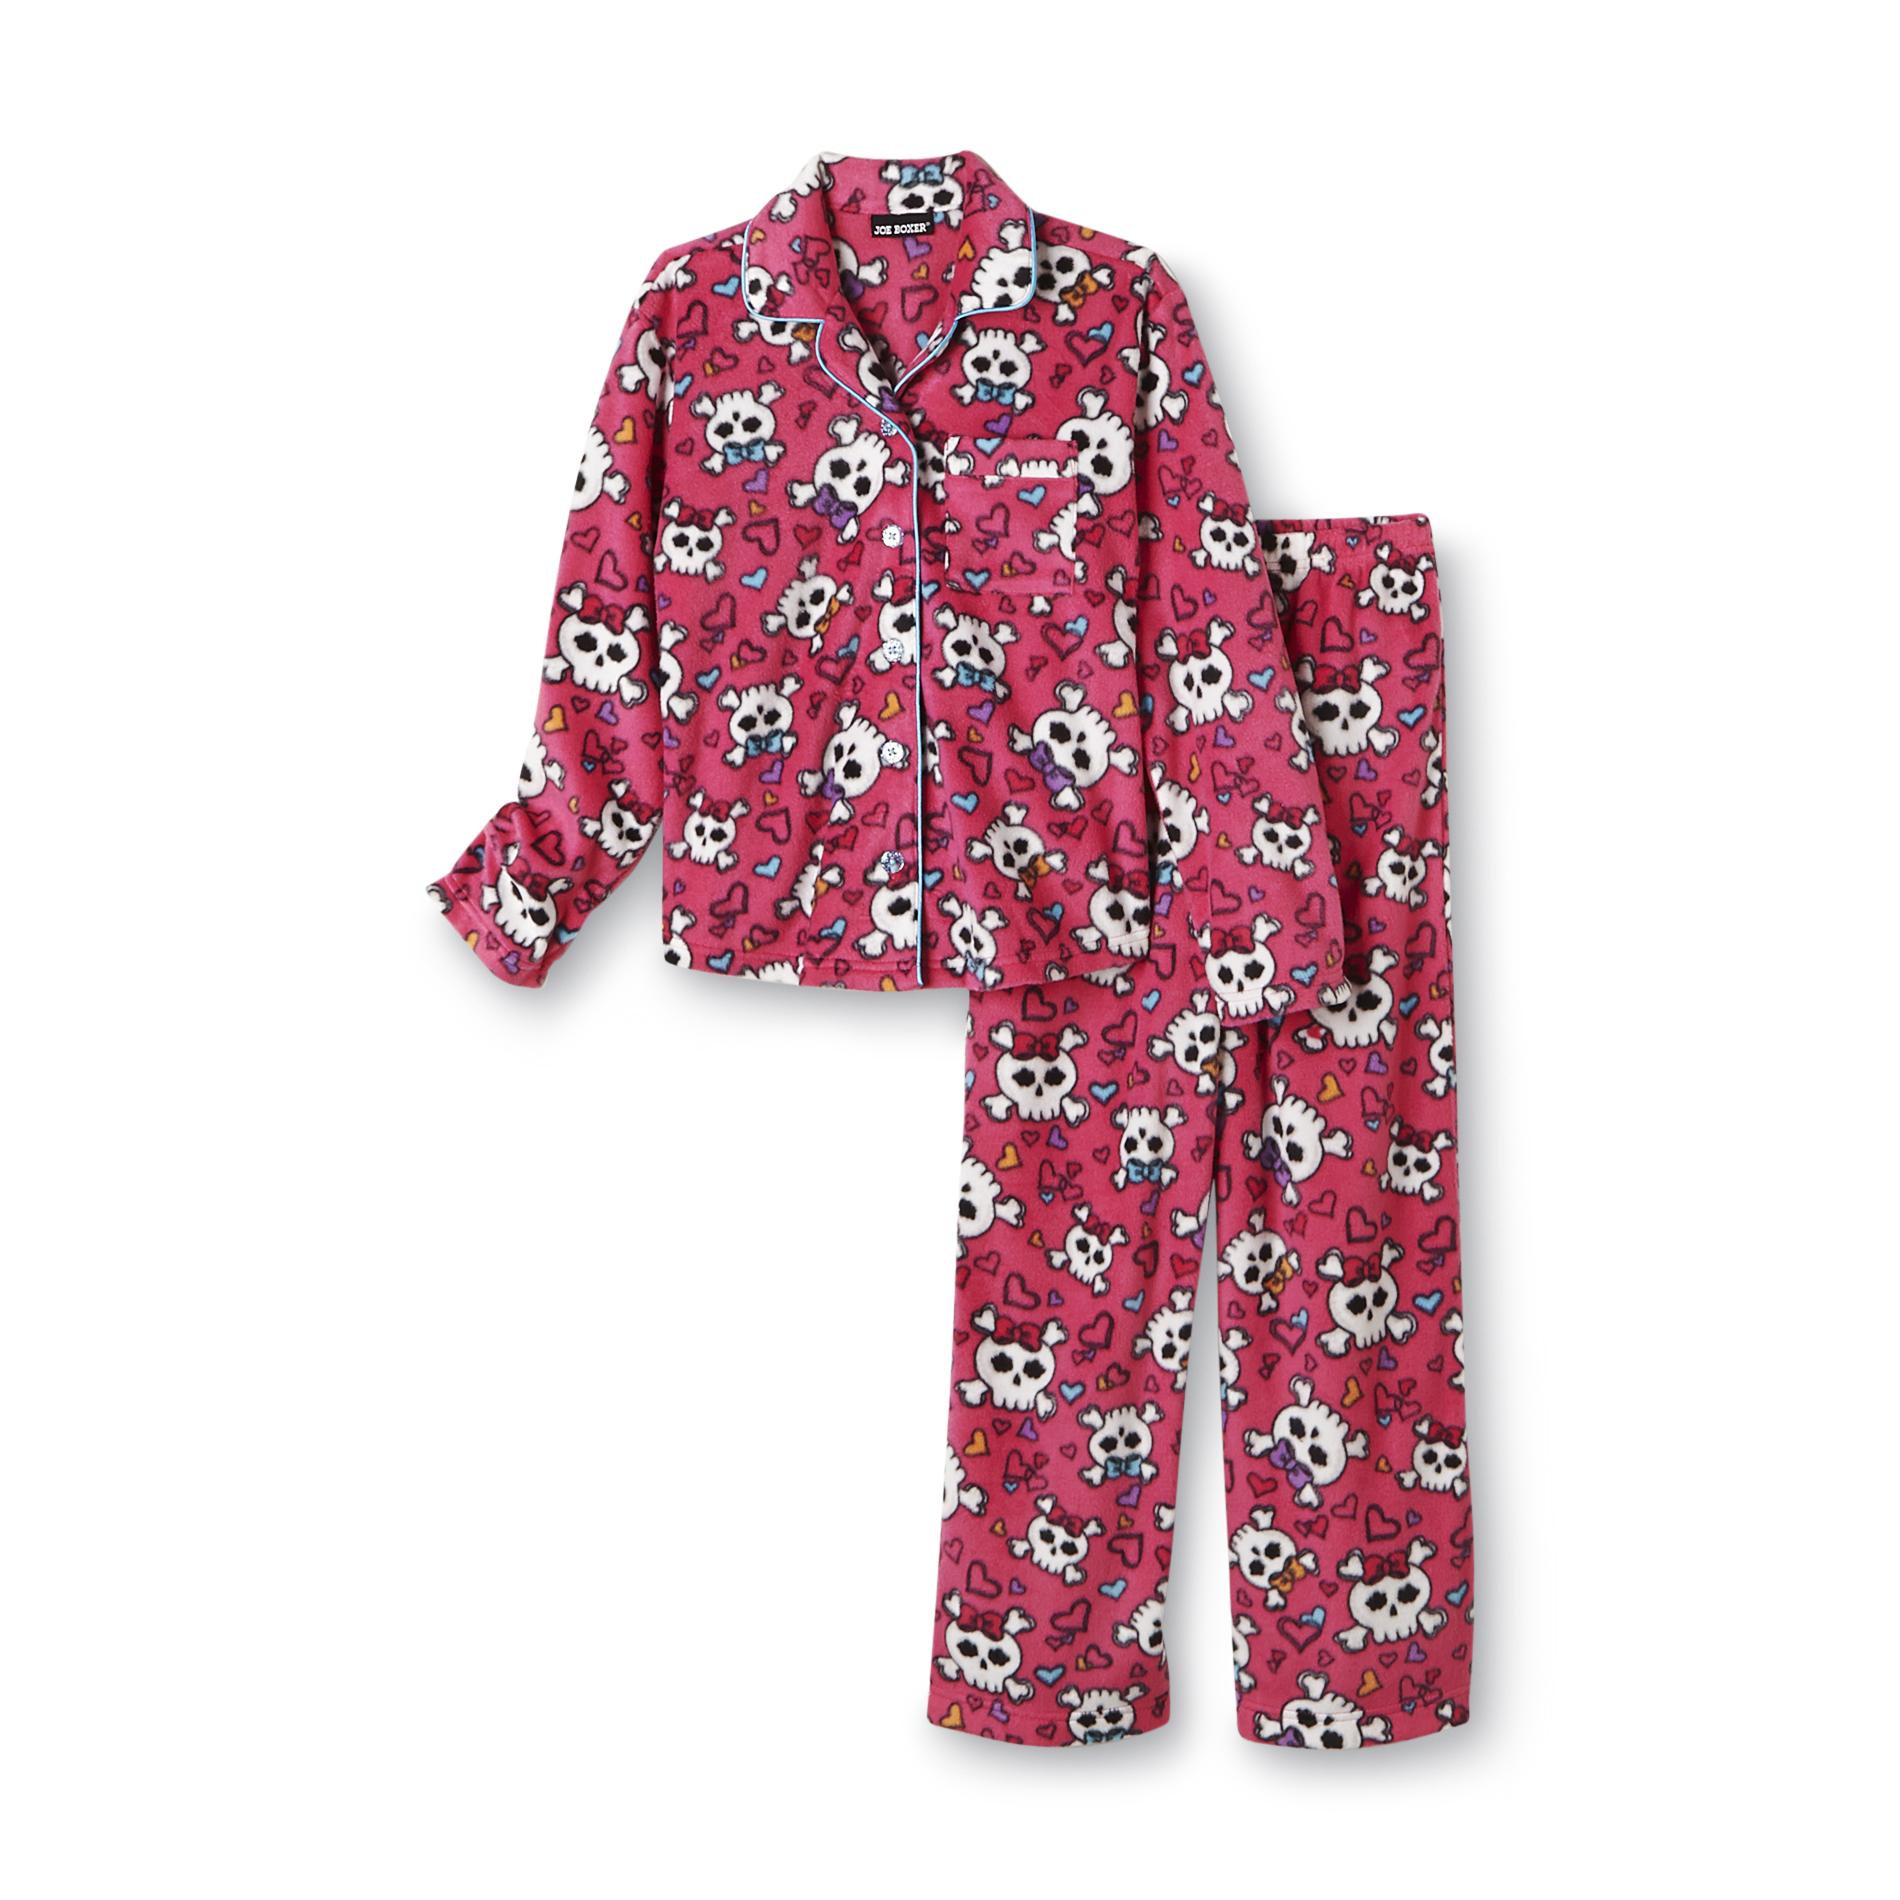 Joe Boxer Girl's Fleece Pajama Set - Skulls & Hearts